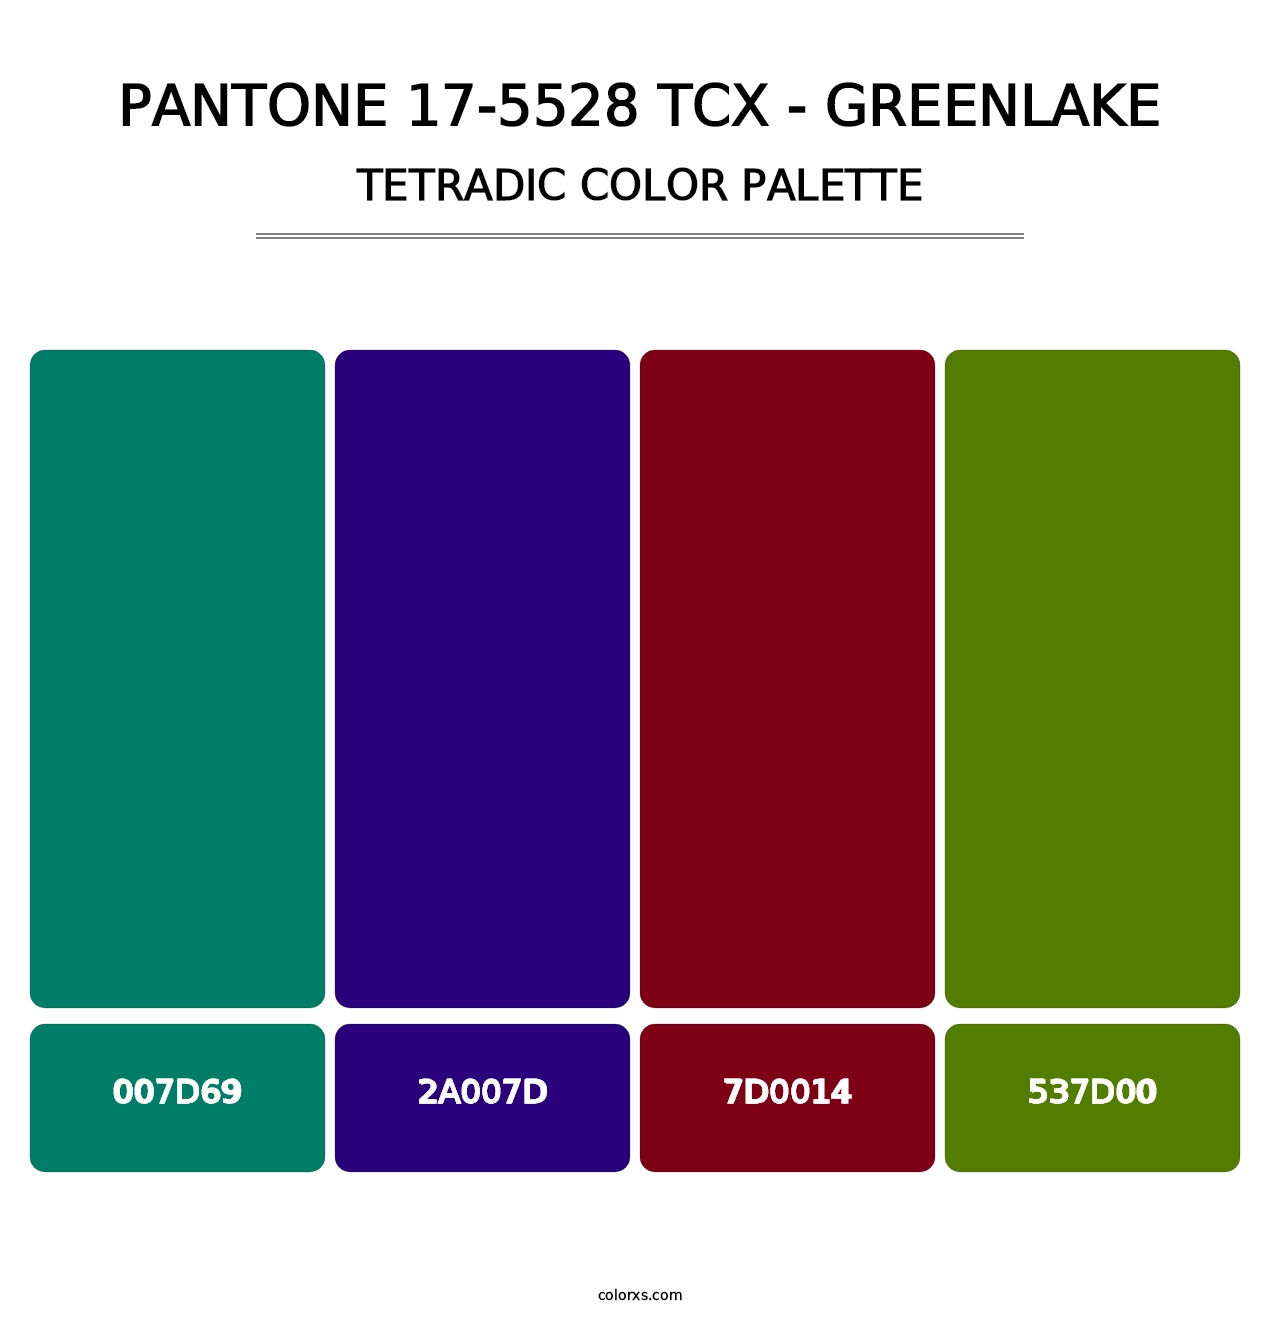 PANTONE 17-5528 TCX - Greenlake - Tetradic Color Palette